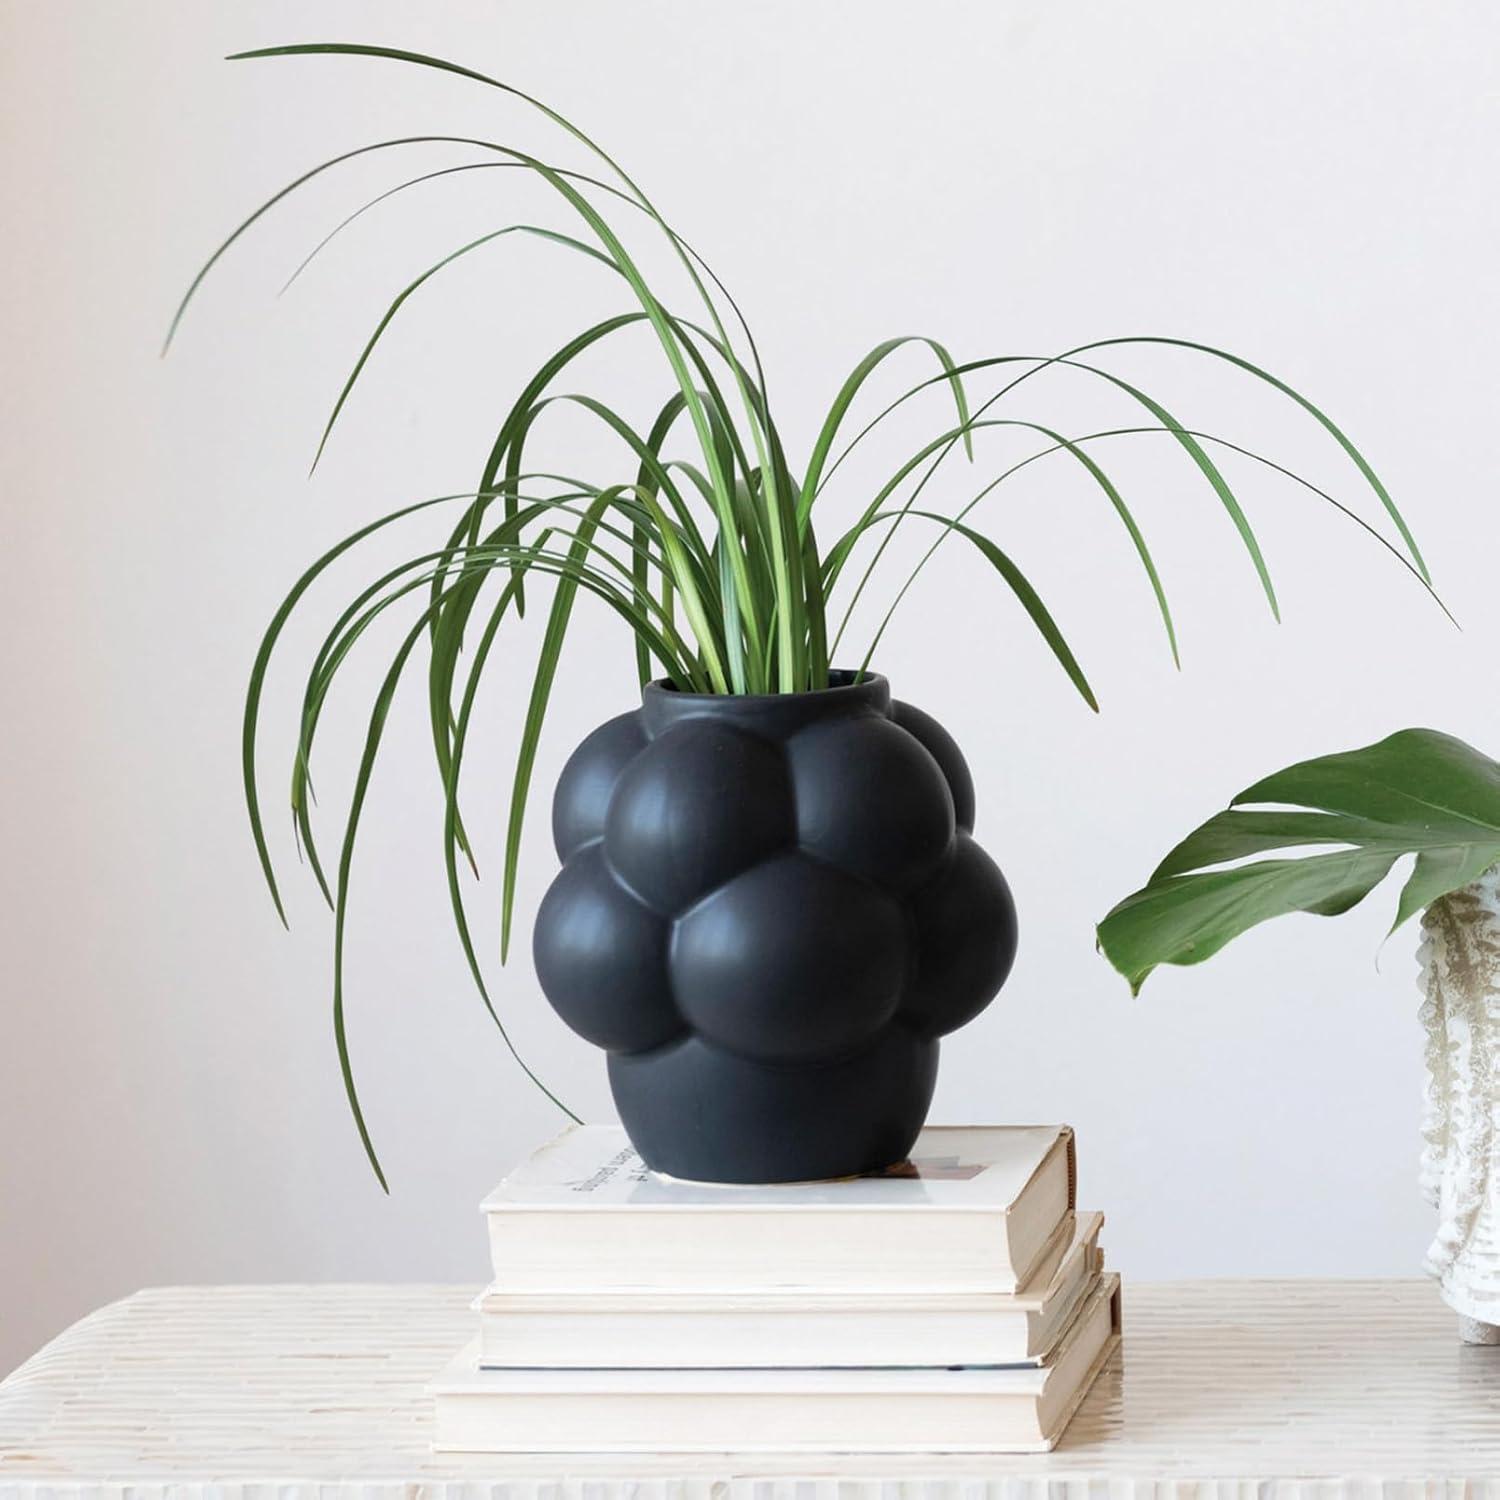 Matte Black Stoneware 8'' Round Vase with Raised Dots